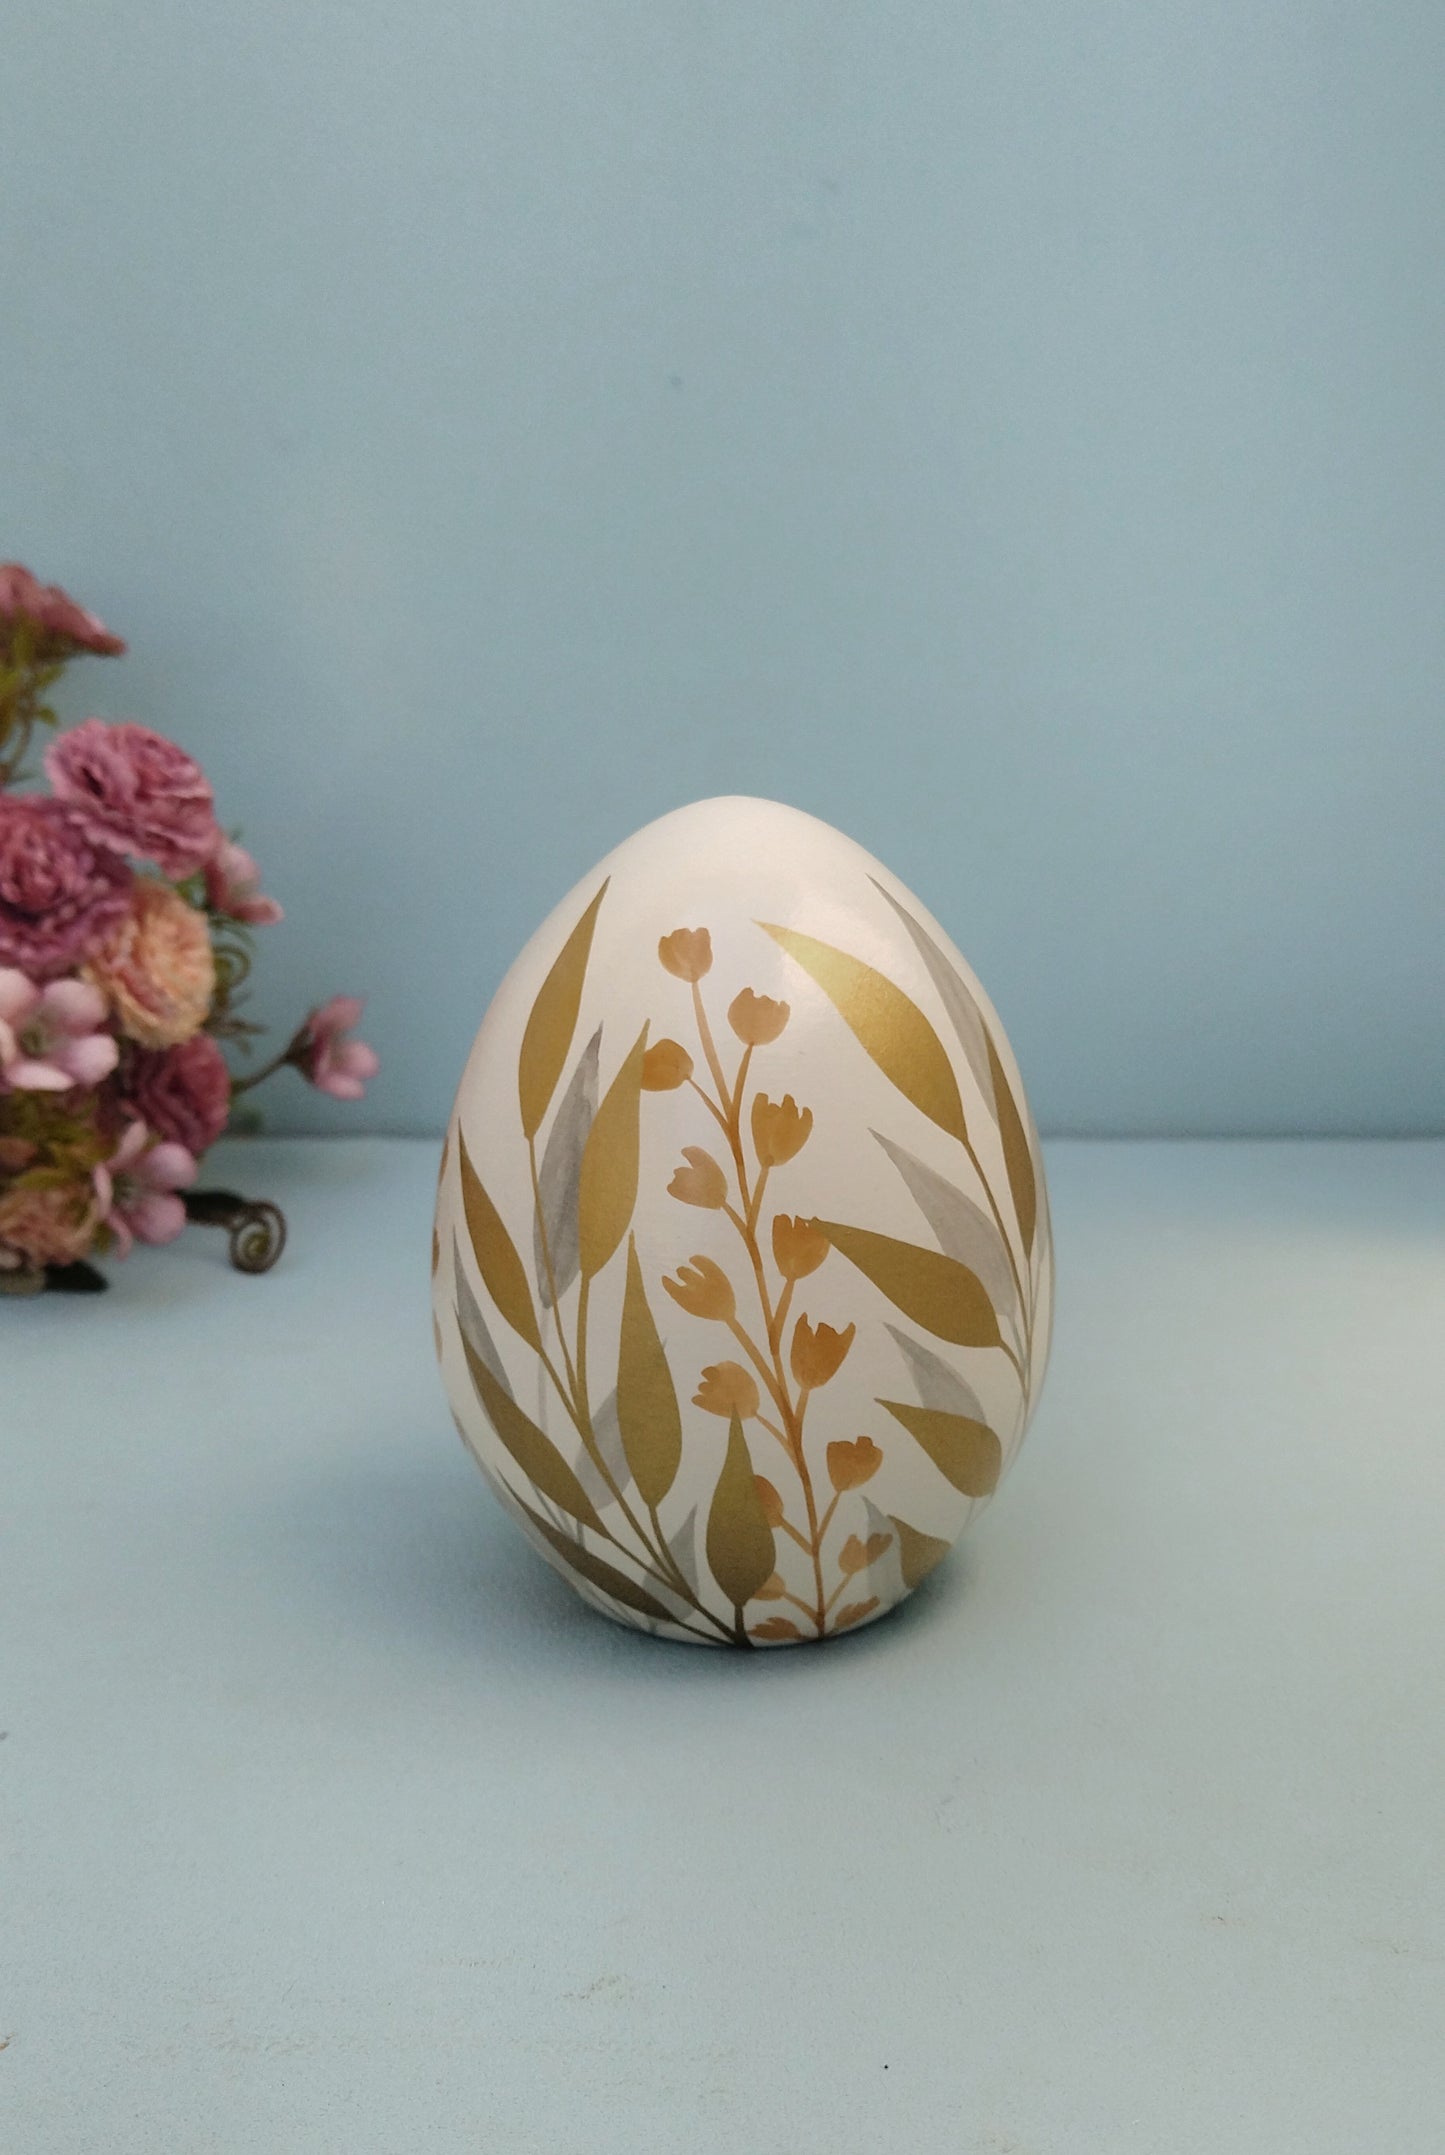 Ceramic Easter Egg With Golden Leaves